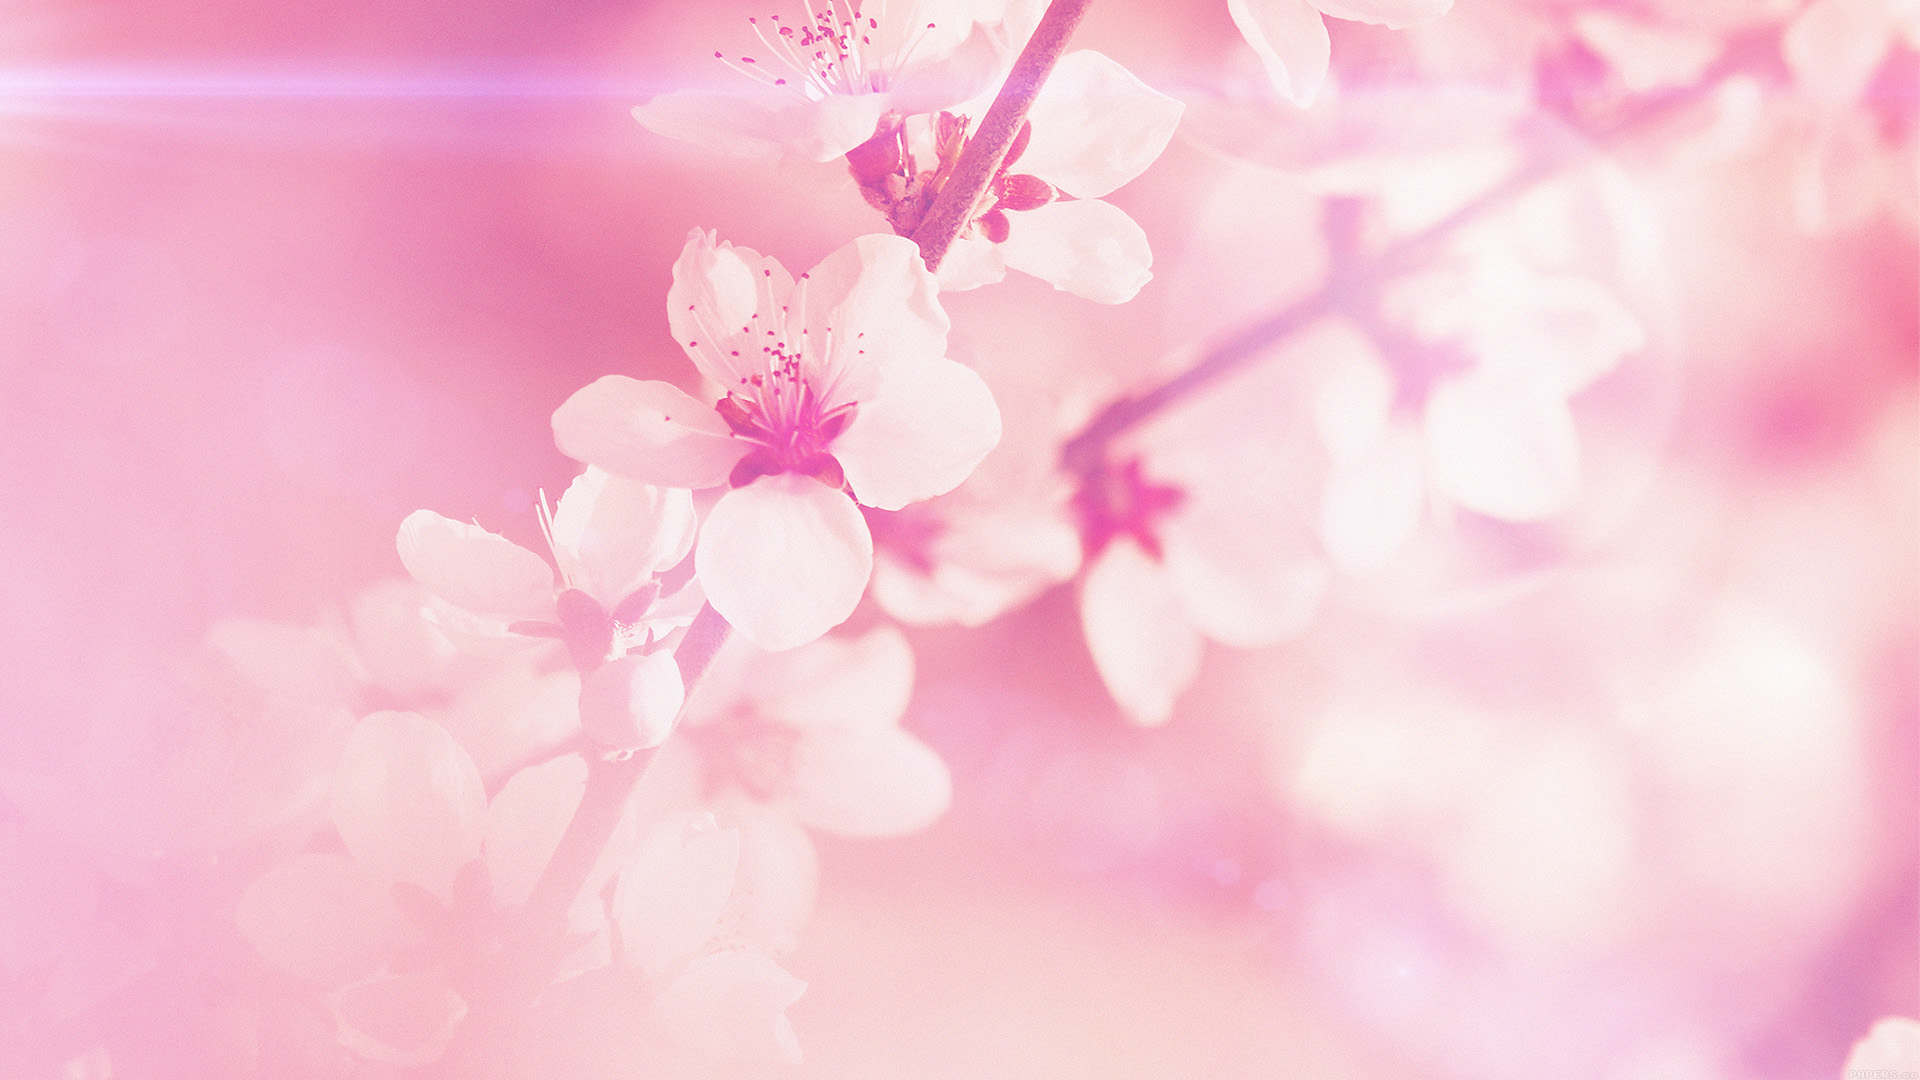 wallpaper for desktop, laptop. spring flower pink cherry blossom flare nature